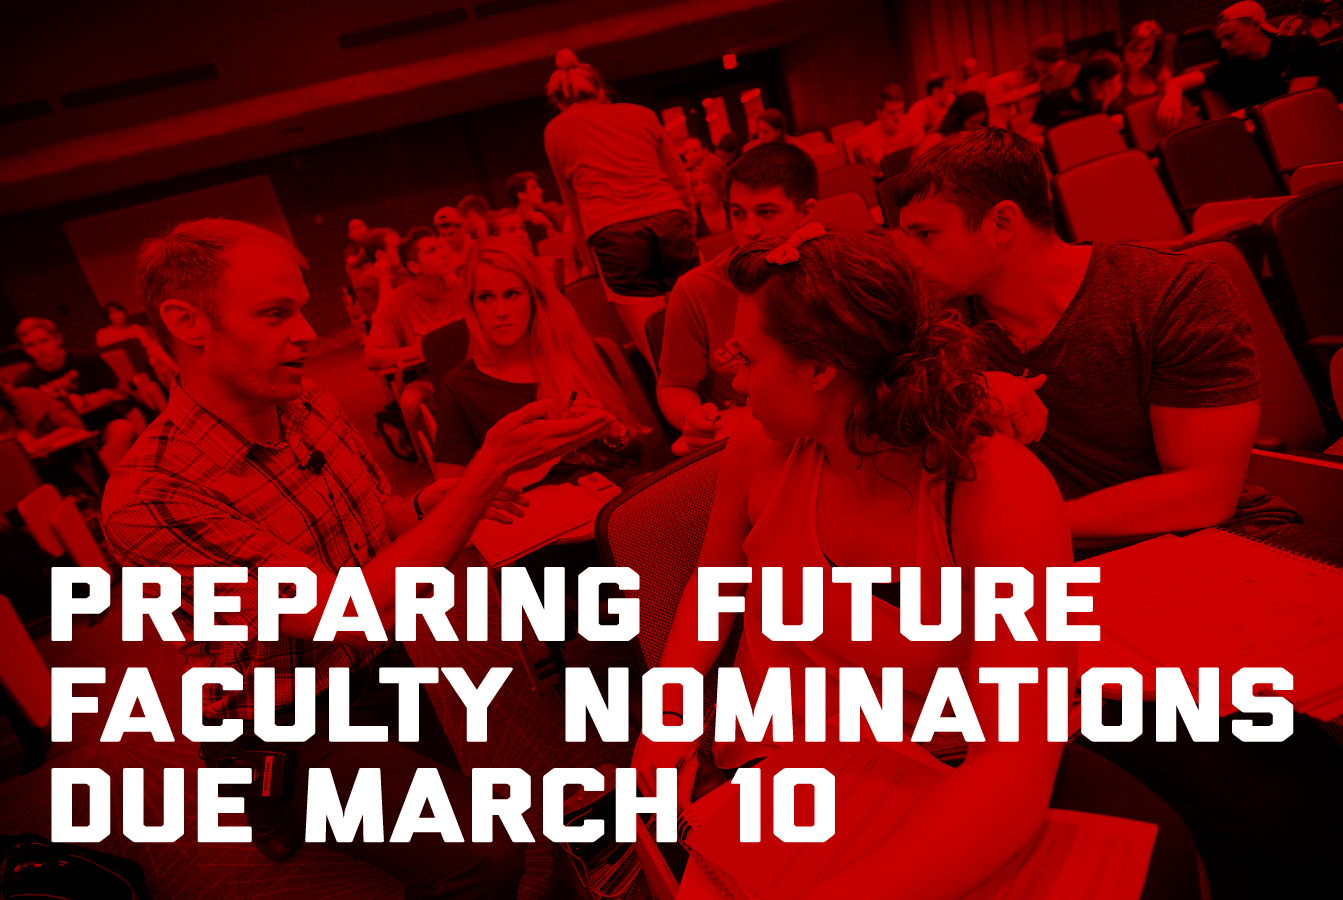 Preparing Future Faculty Nominations due March 10